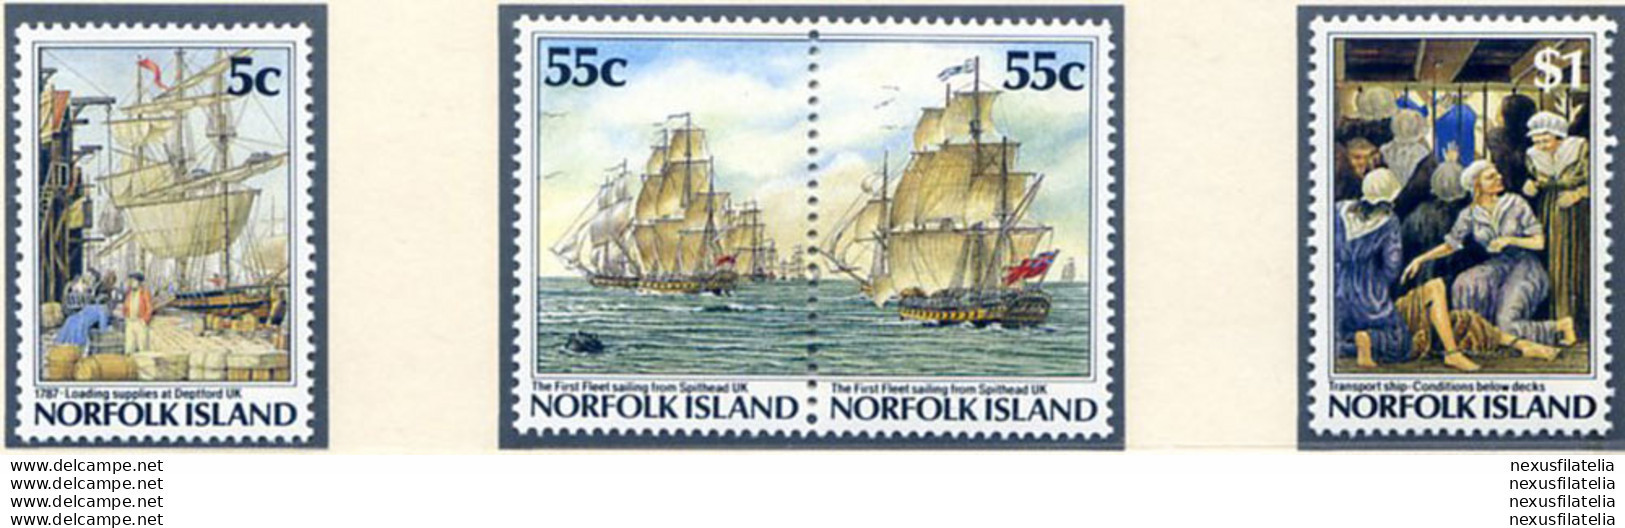 Velieri 1987. - Norfolkinsel